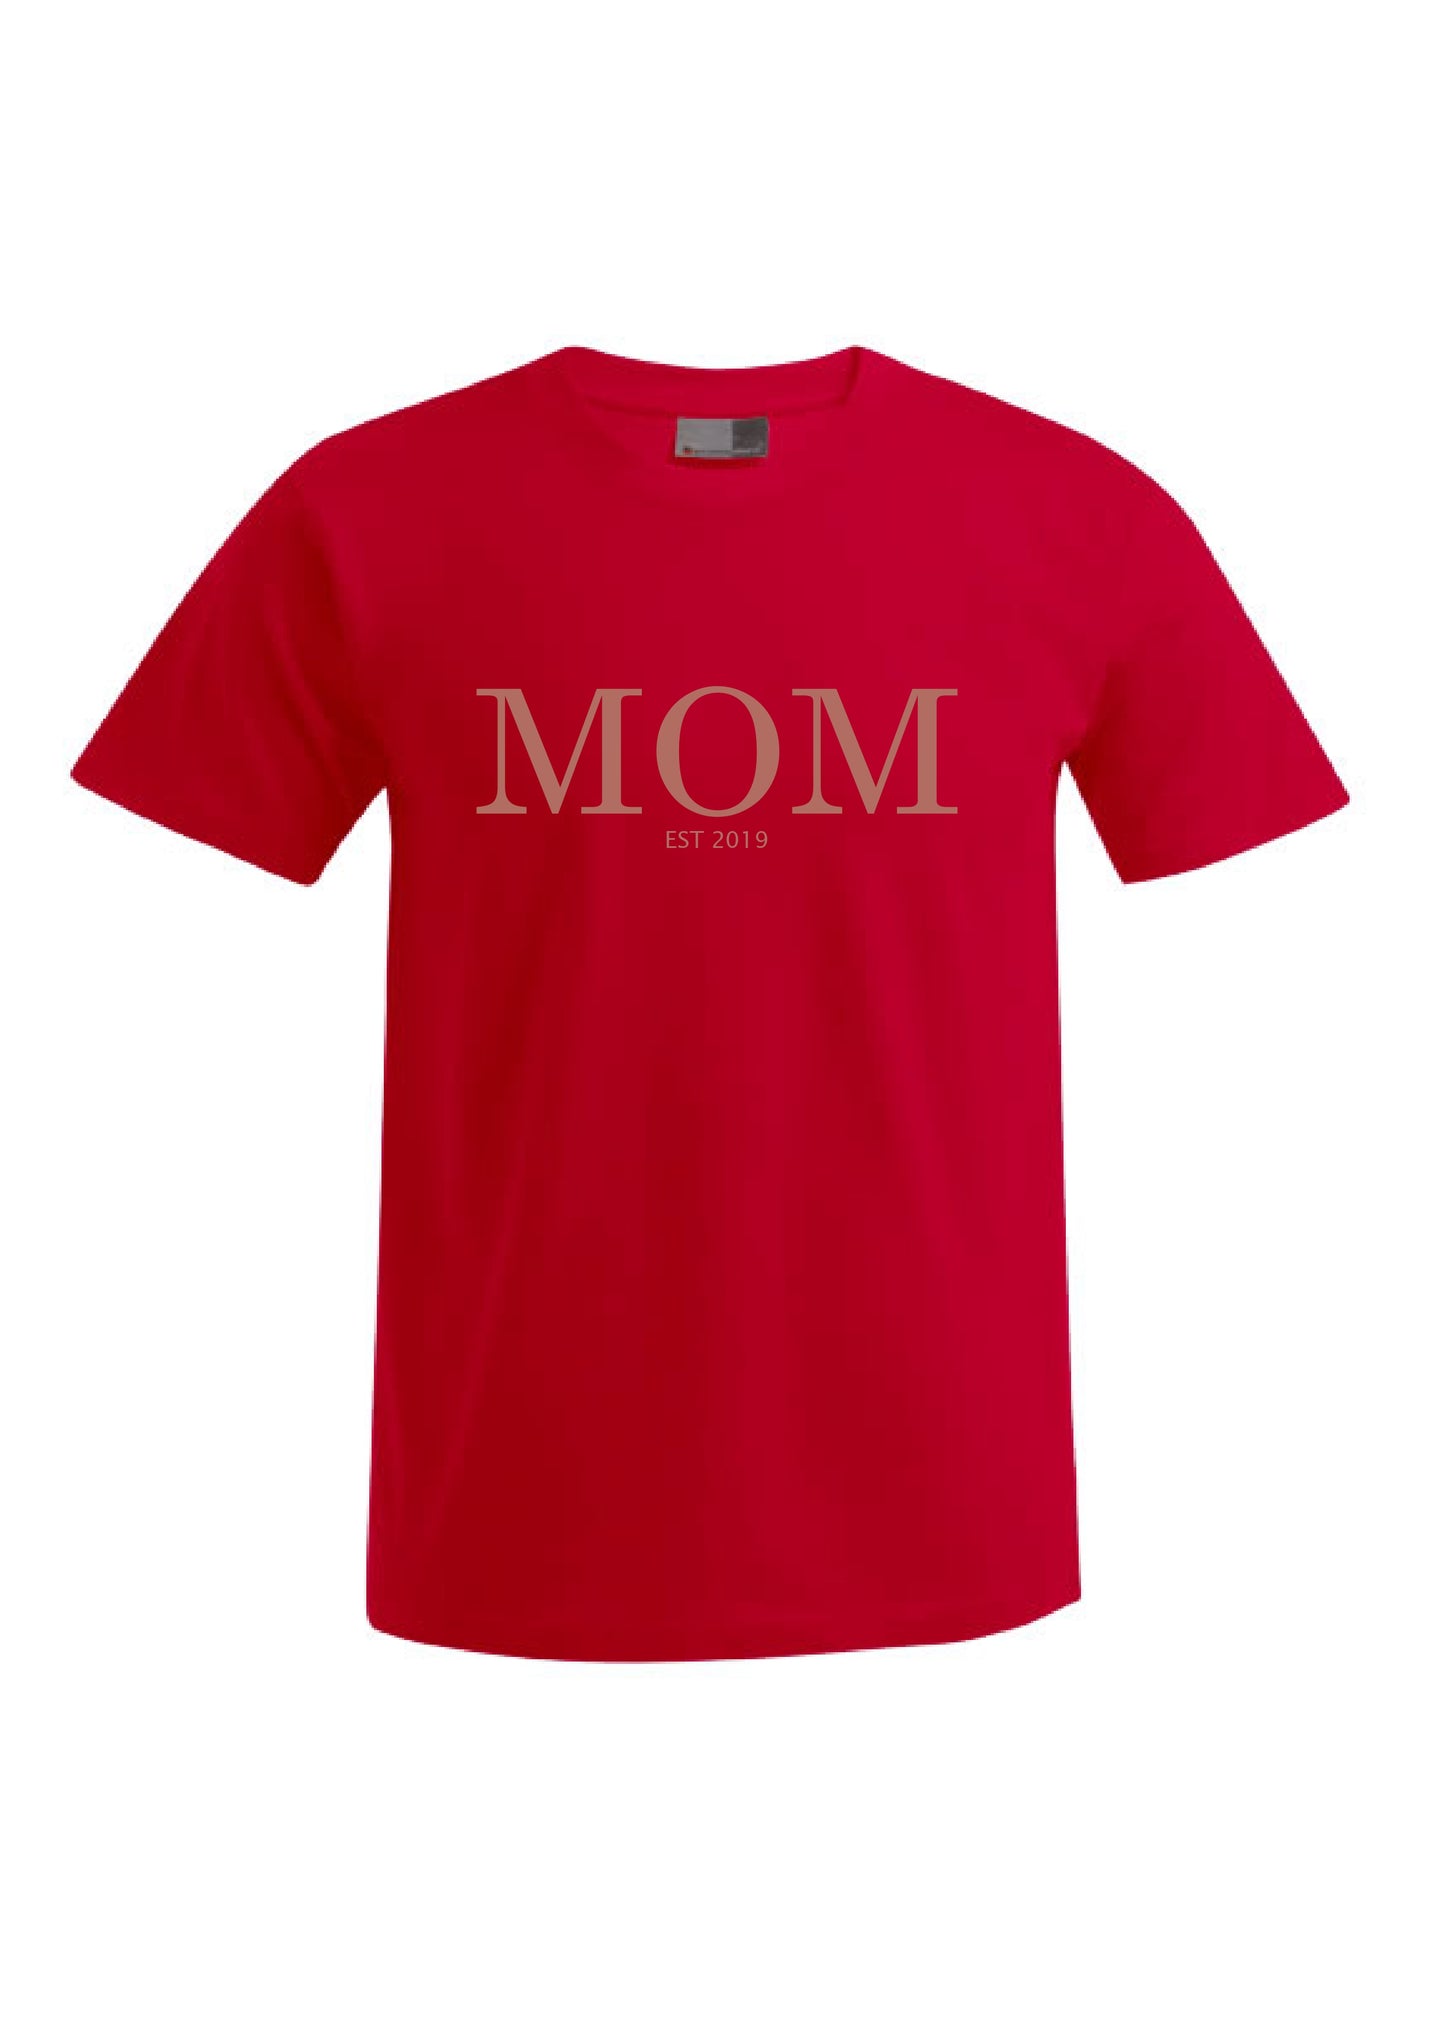 T-Shirt MOM - Est rosegold metallic